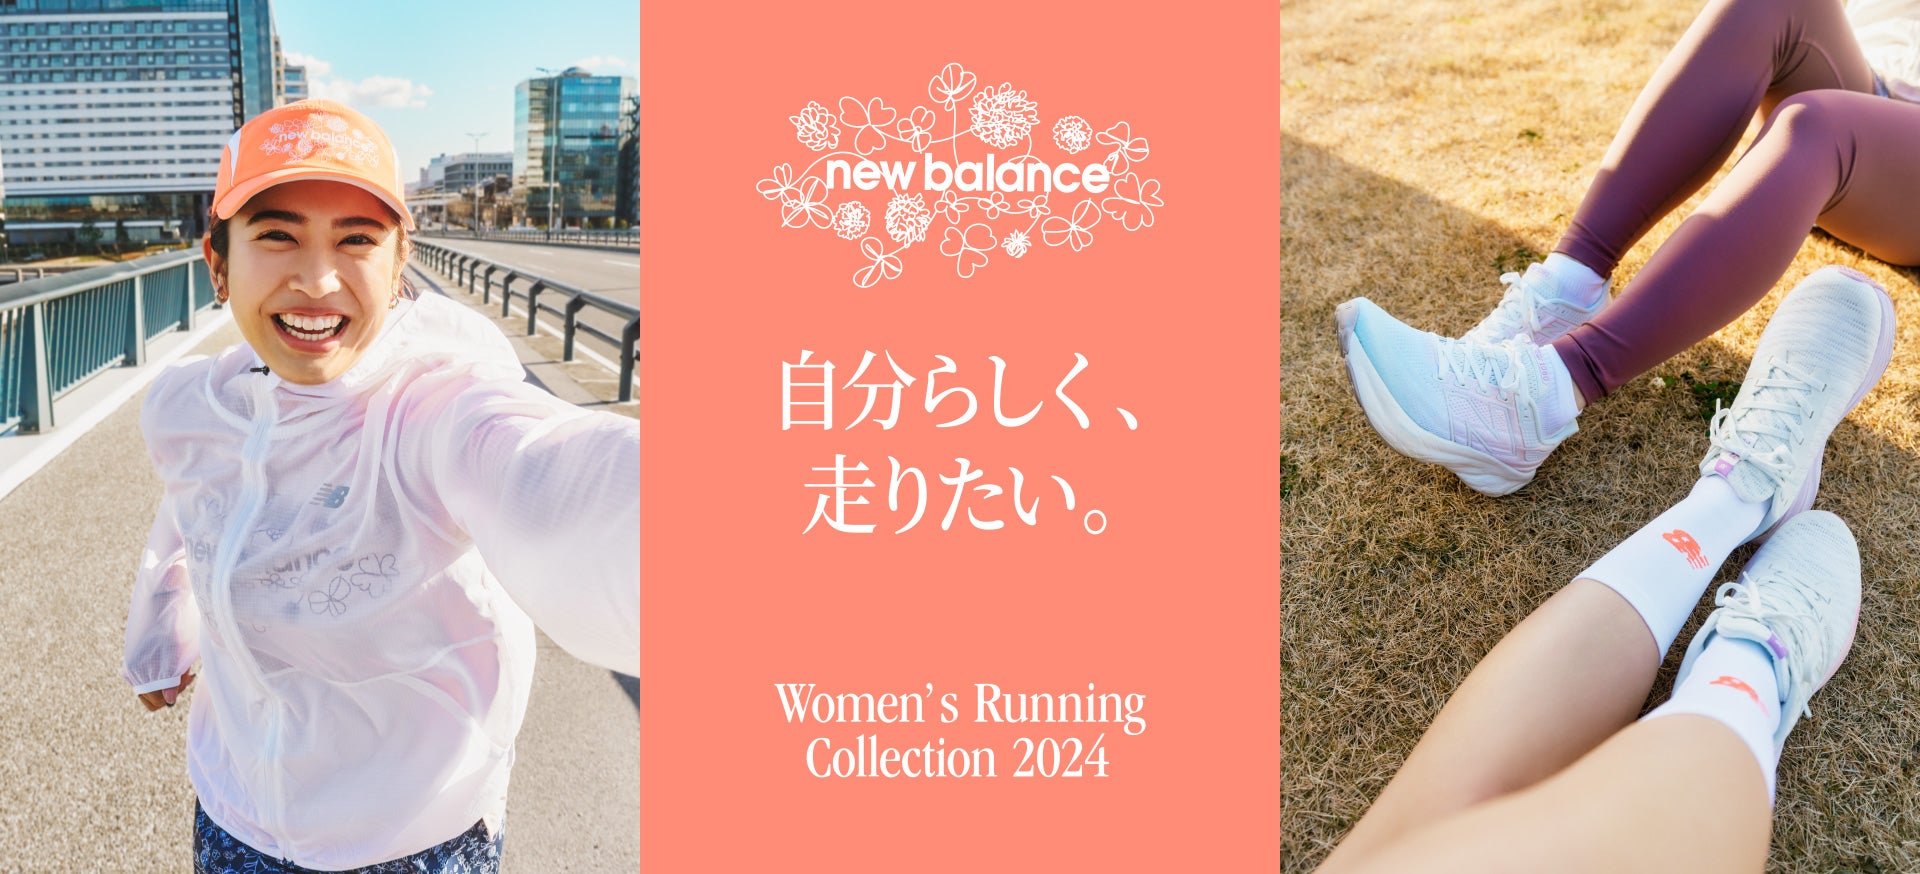 Nagoya Women's Marathon Limited Collection 1